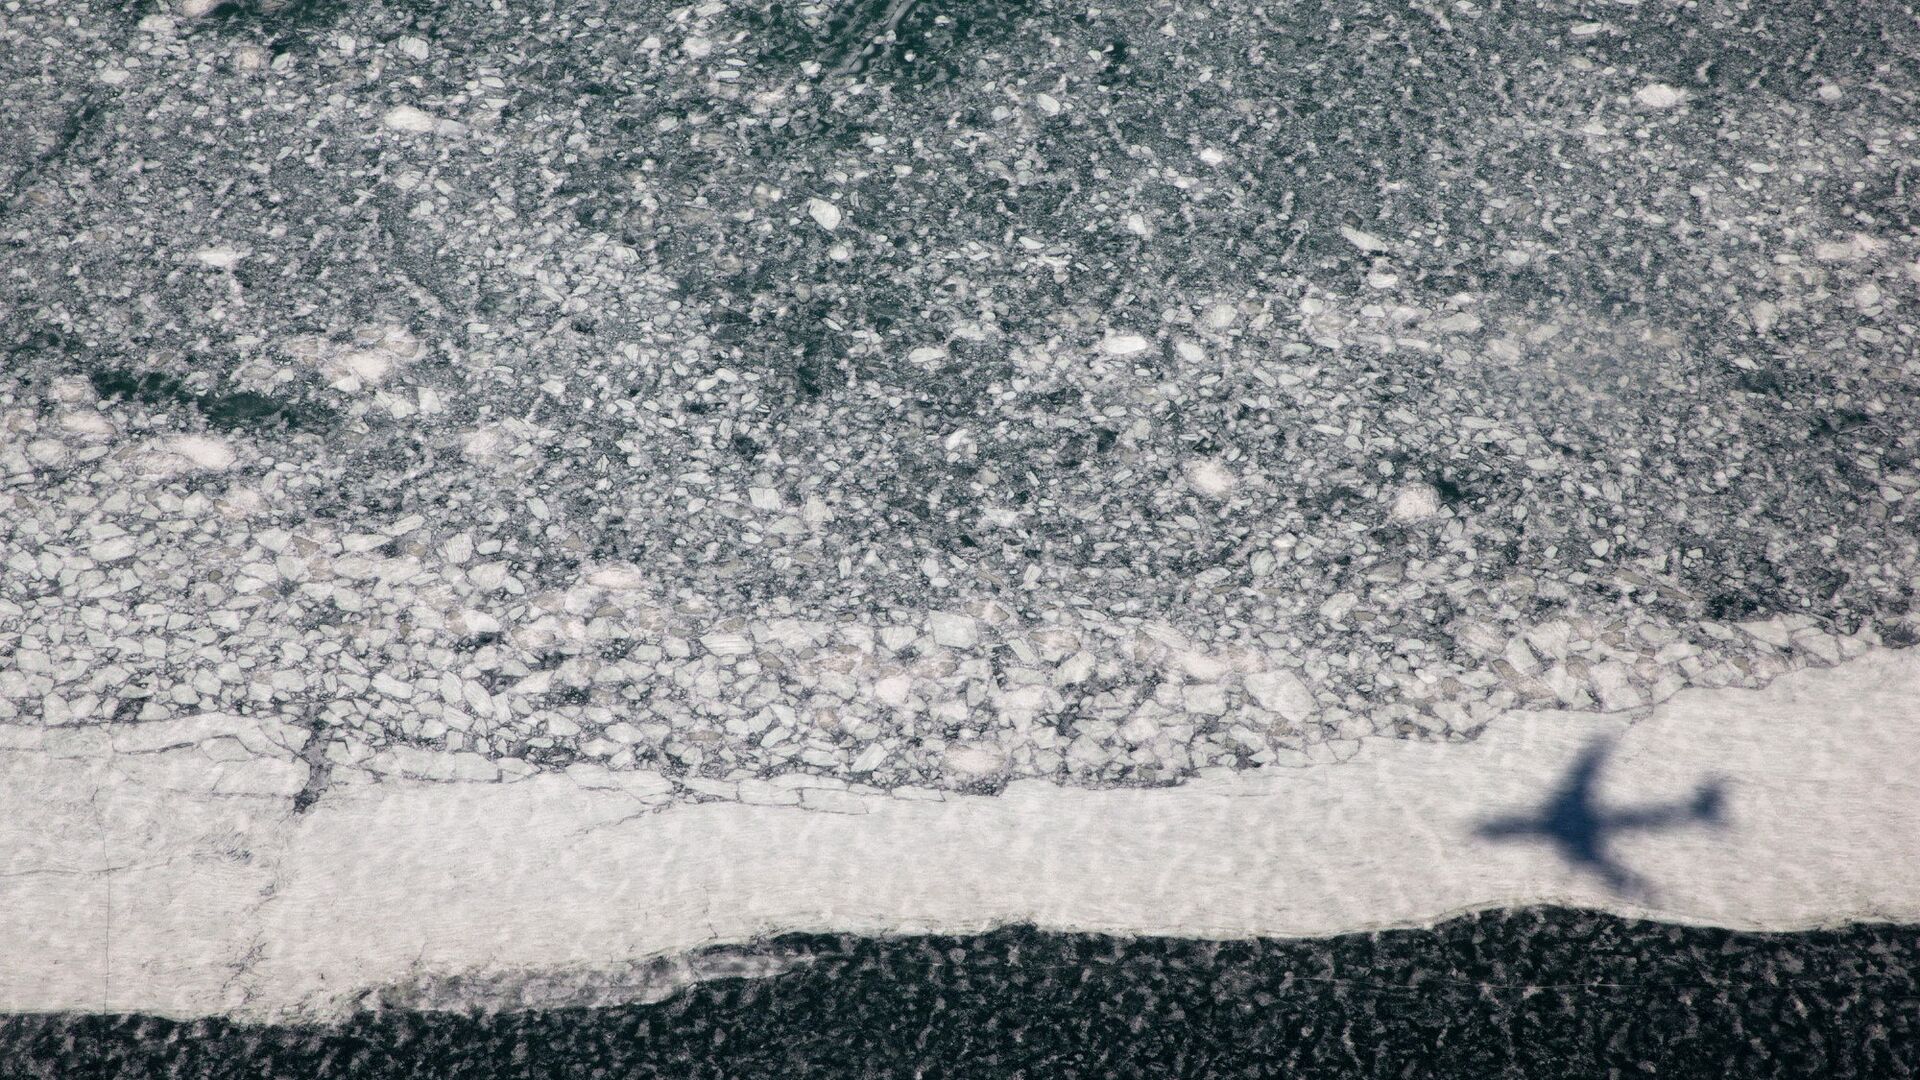 Тень от самолета президента США, пролетающего над замерзшим озером Эри - РИА Новости, 1920, 24.08.2020